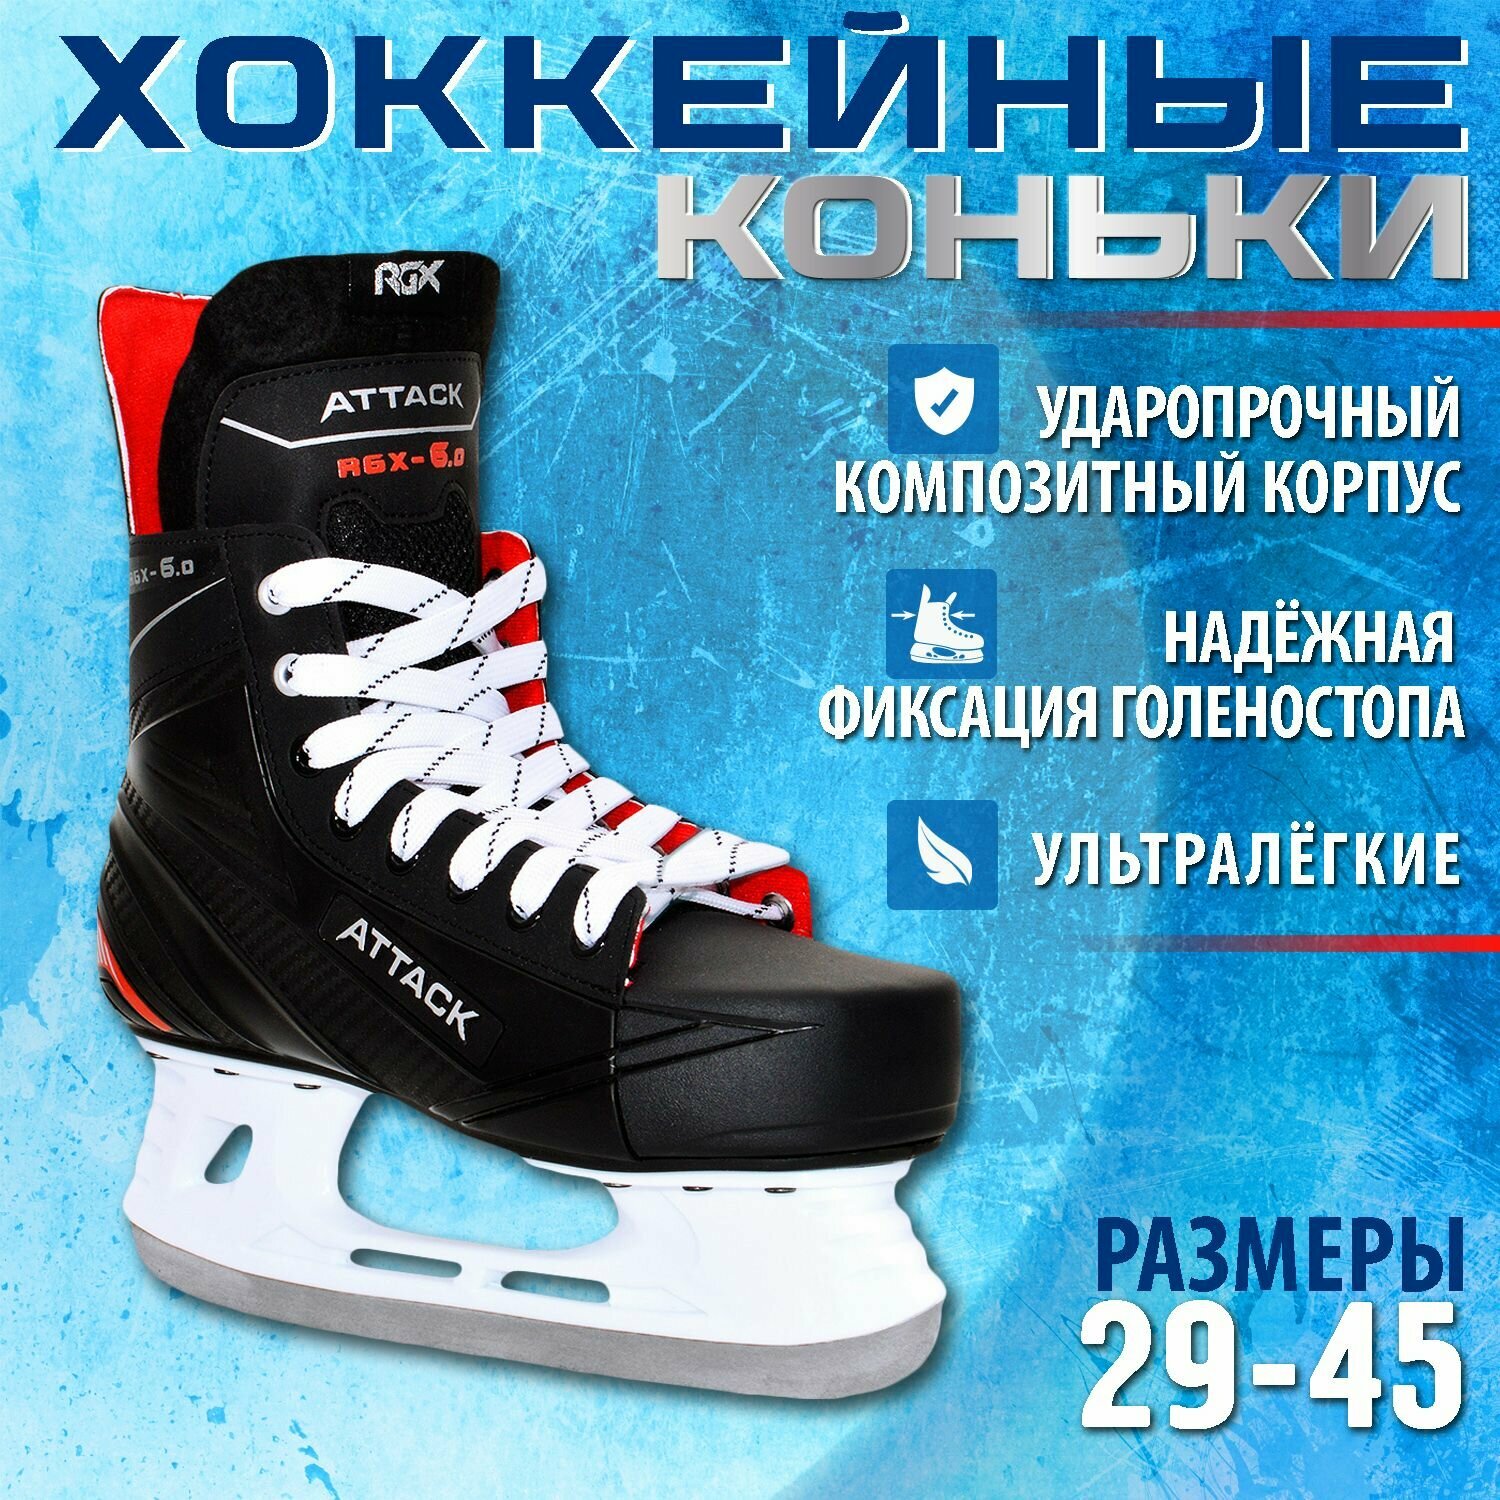 Хоккейные коньки Rgx-6.0 Attack Red размер 42